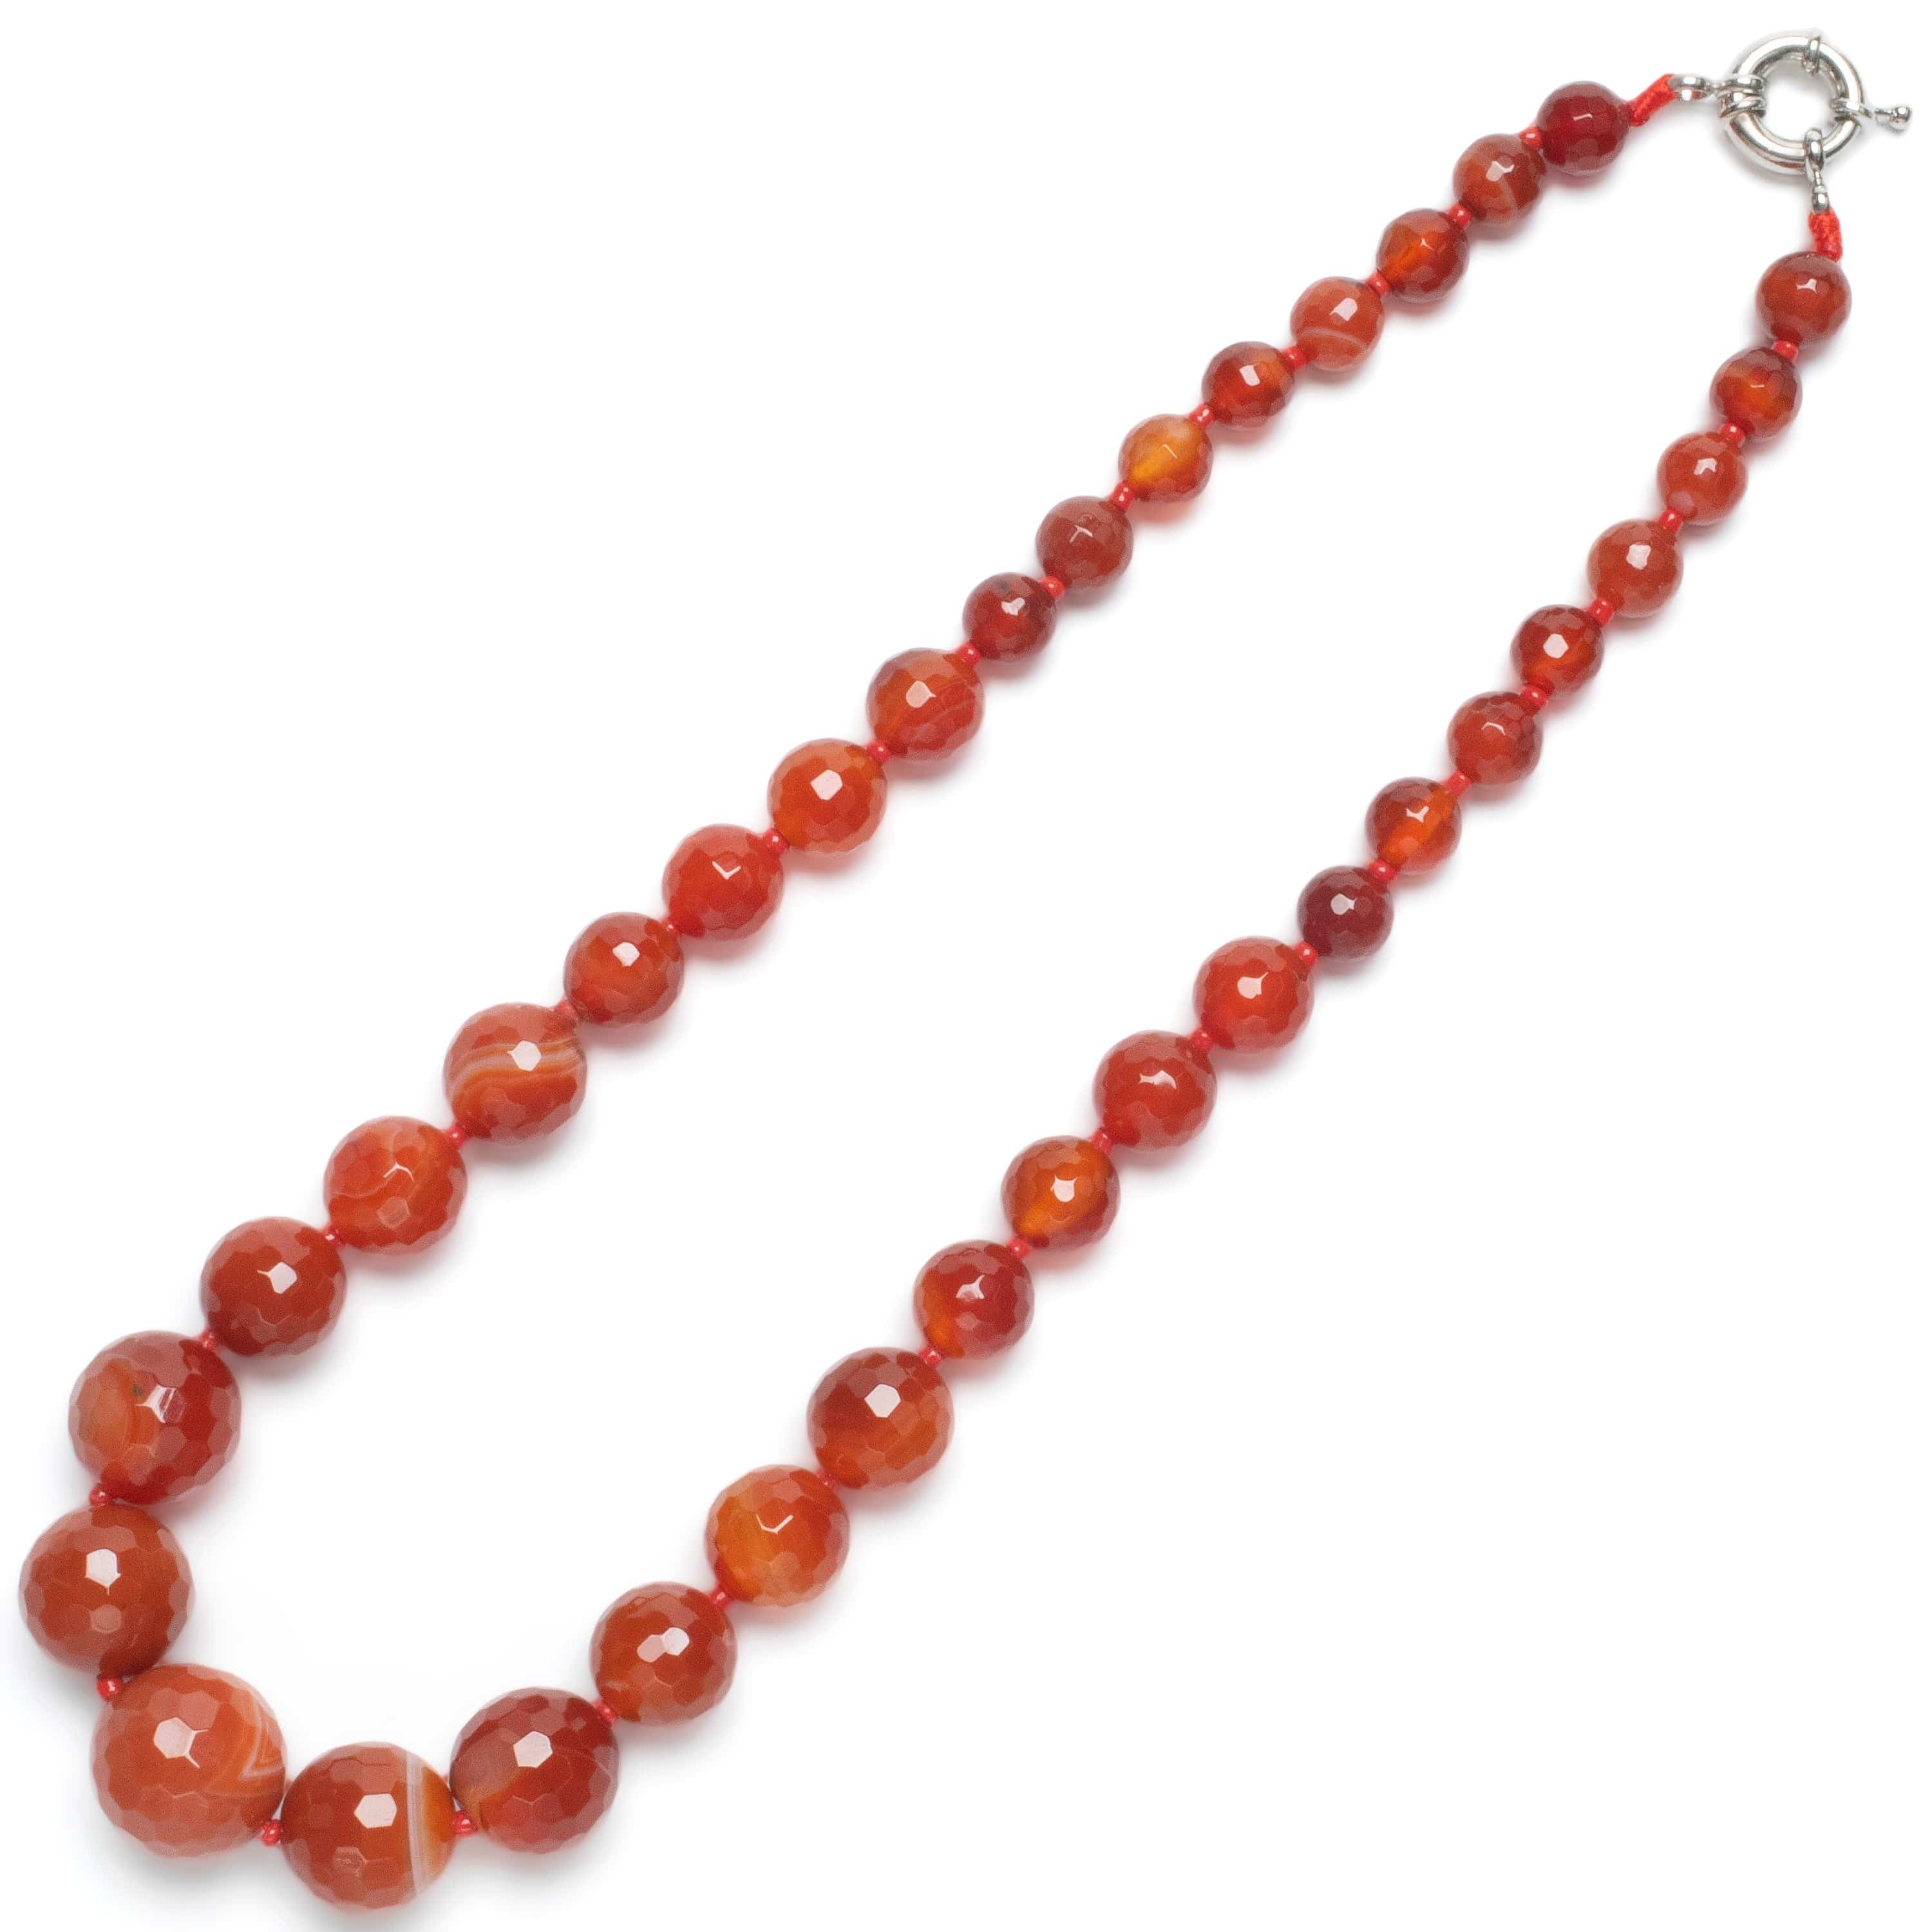 KALIFANO Gemstone Necklaces Faceted Carnelian Beads Gemstone Necklace GOLD-NGP-018